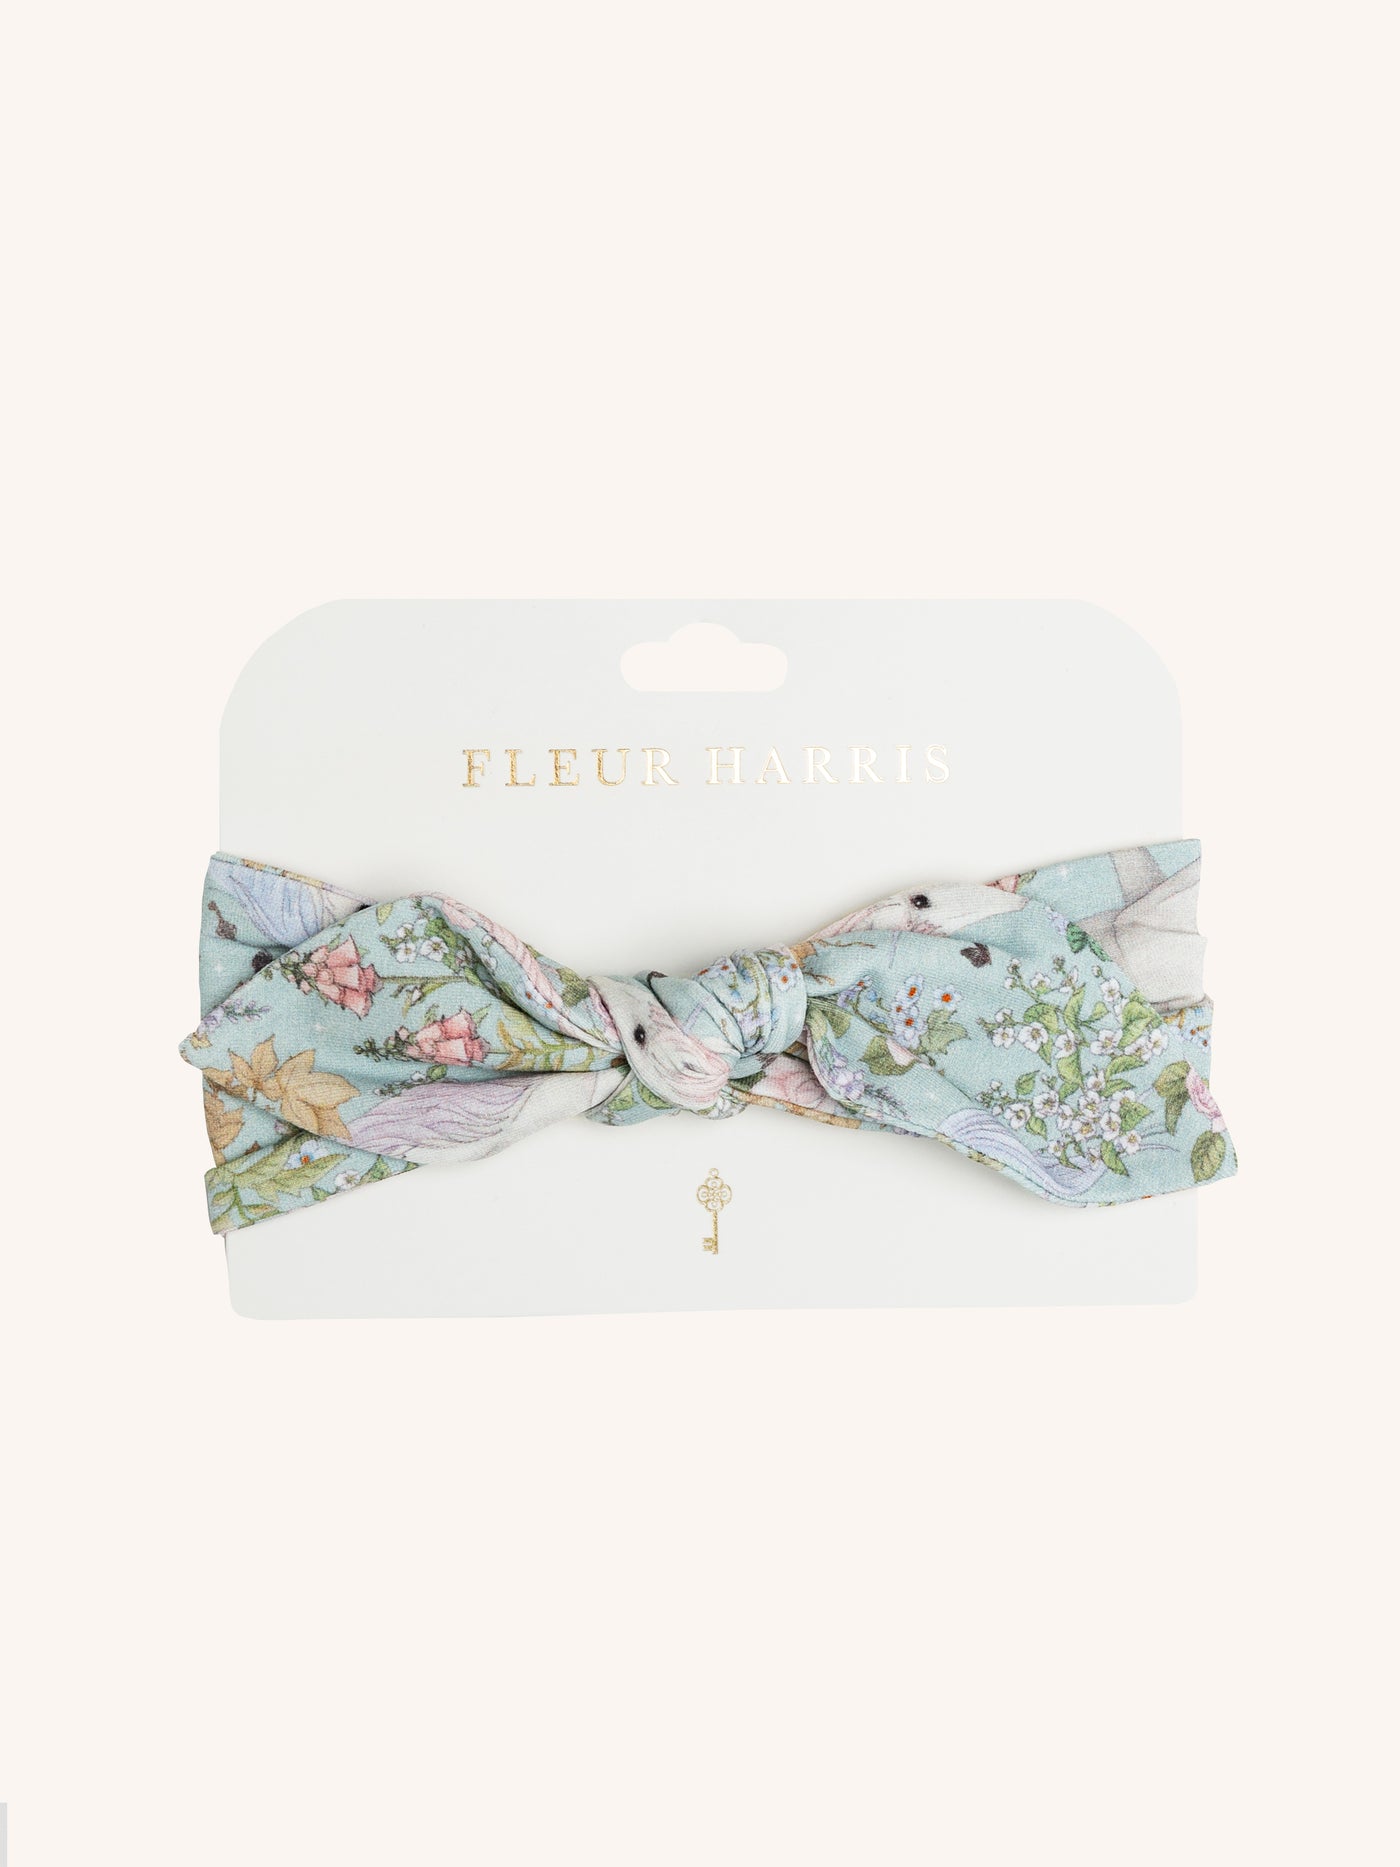 'Field of Dreams' Sweetie Headband - Soft Aqua